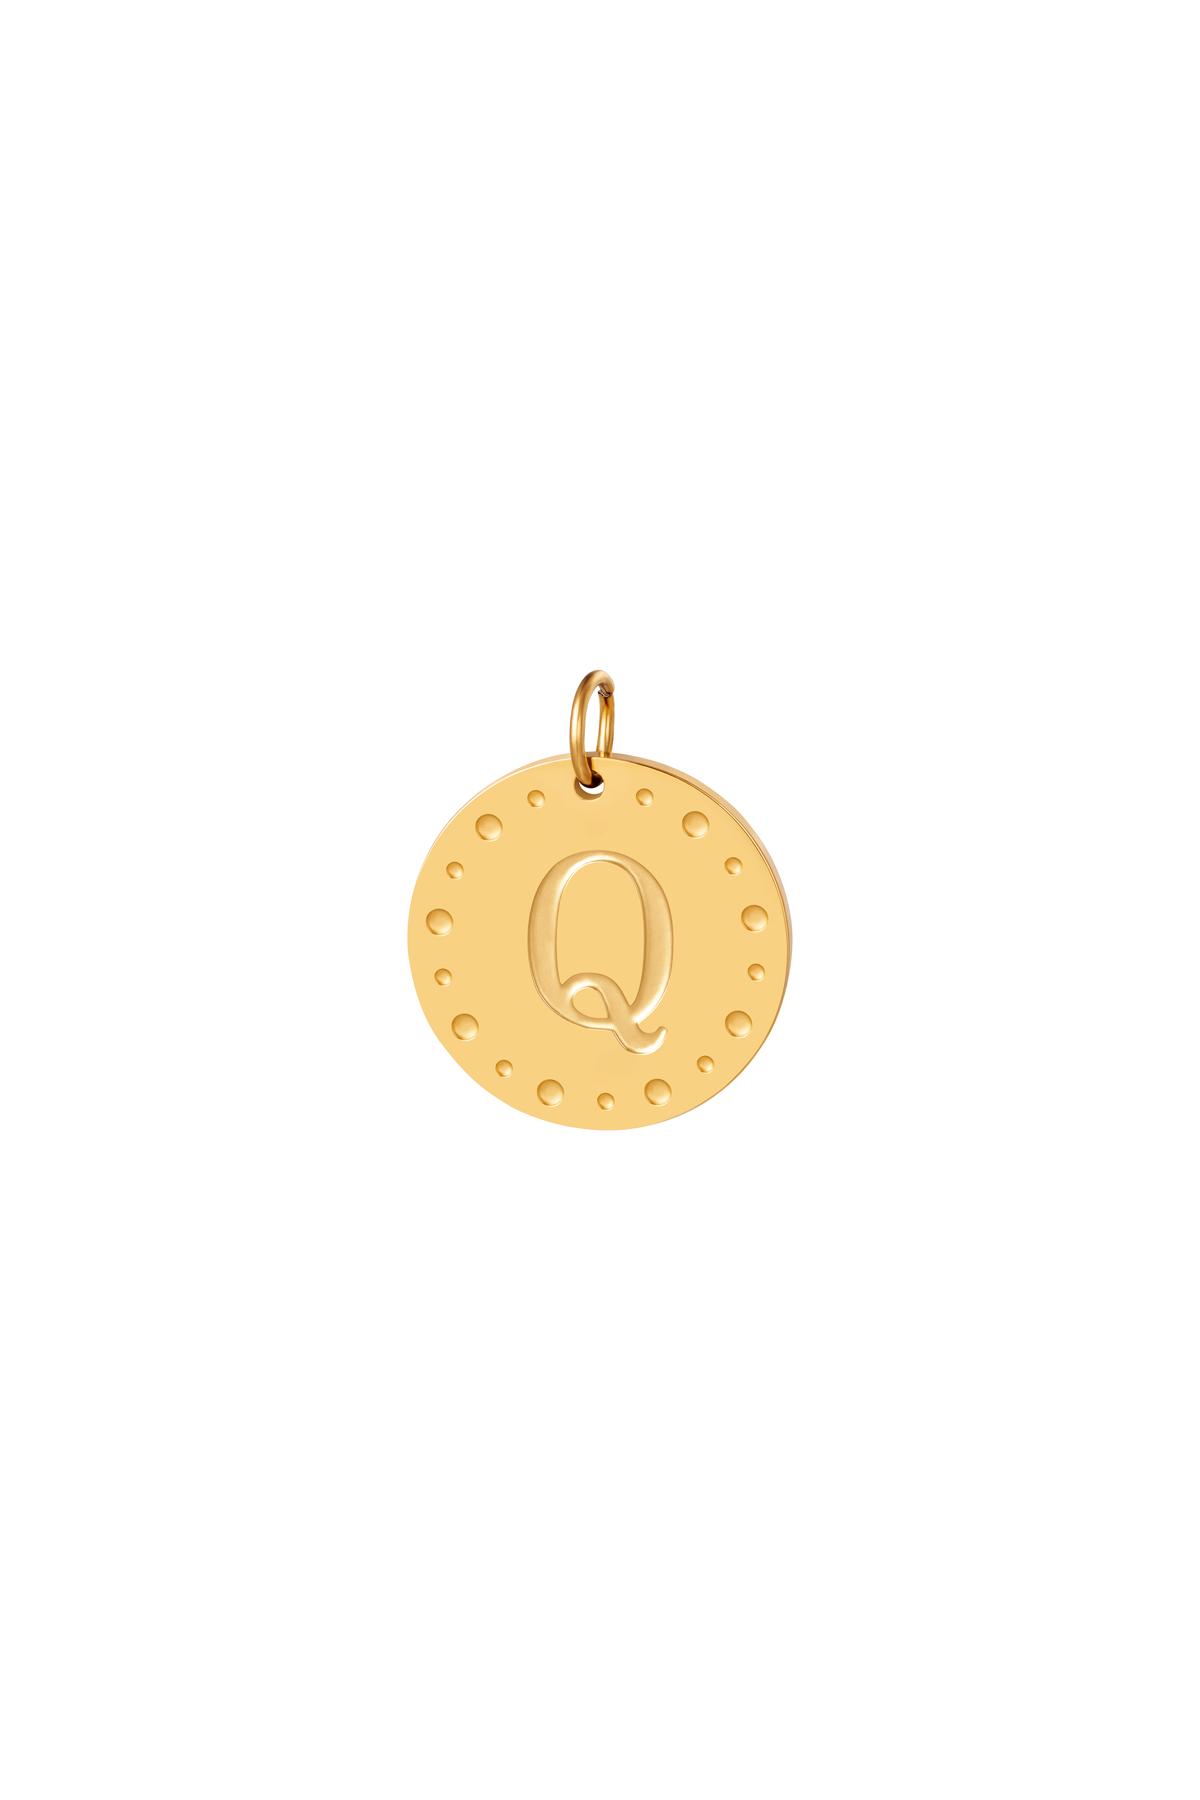 Oro / Charm circular con inicial Q Oro Acero inoxidable Imagen9